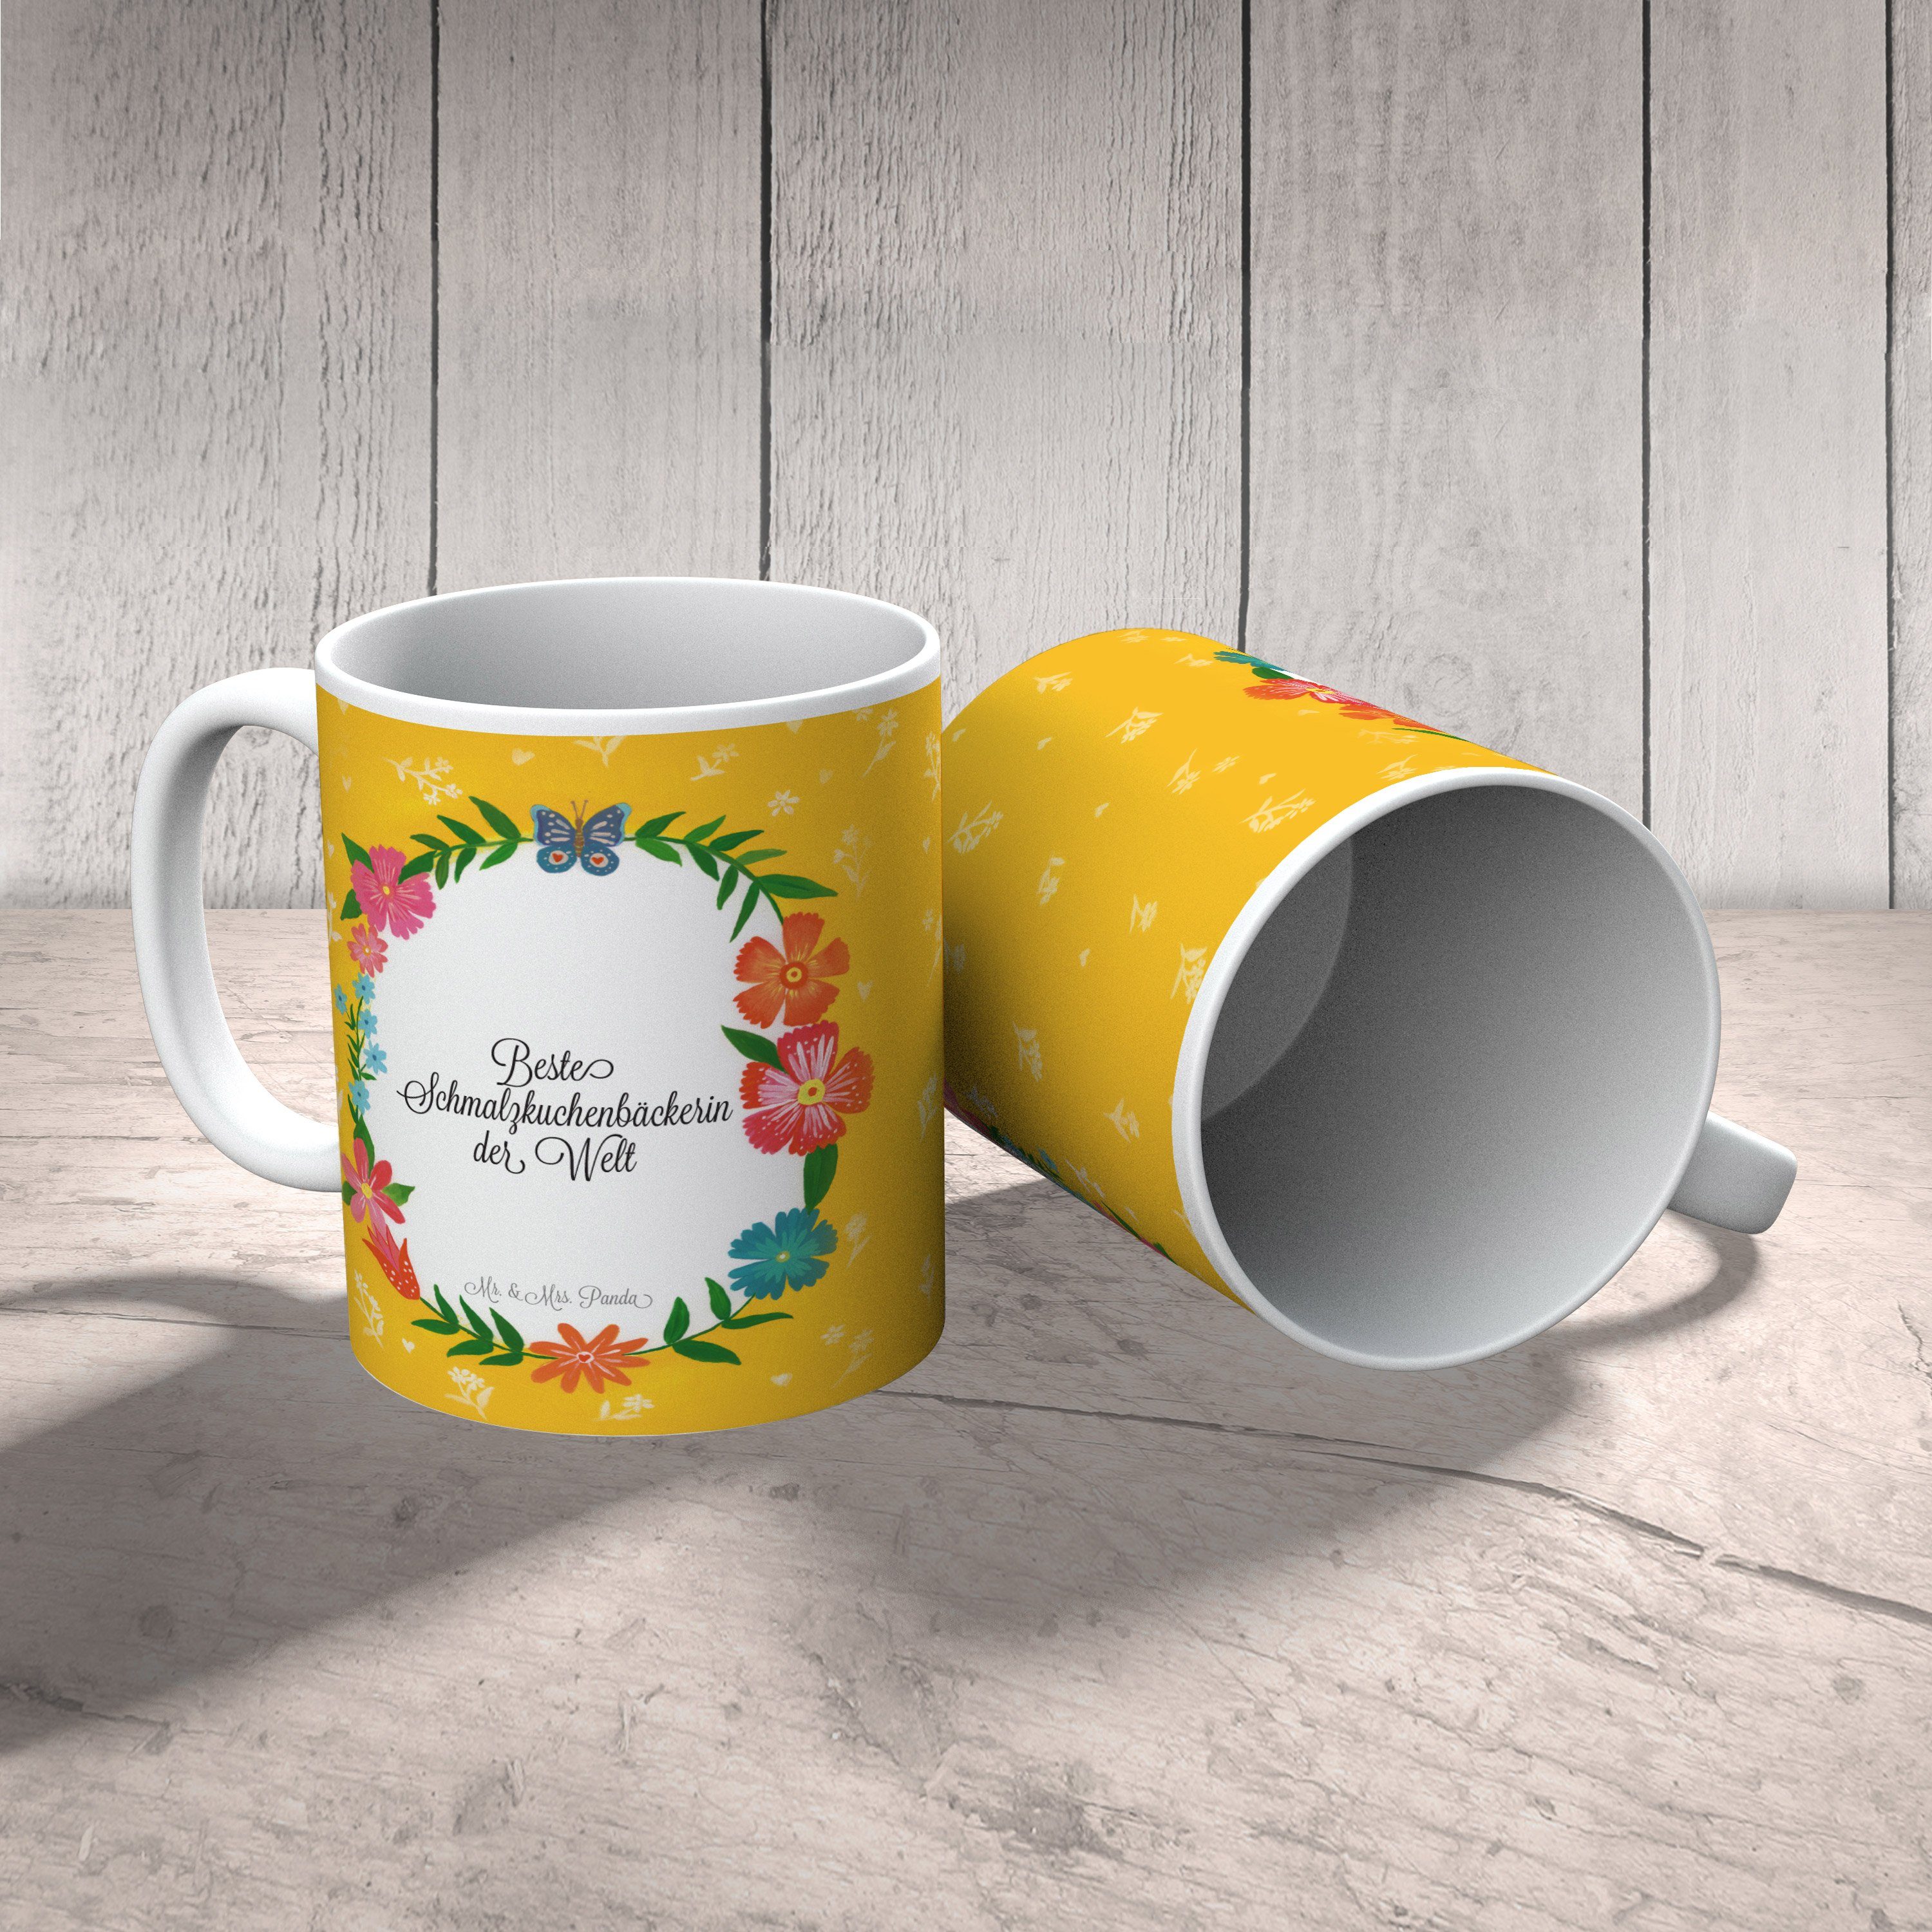 Tasse, Geschenk, - Mrs. Panda Di, Gratulation, Kaffeetasse, Schmalzkuchenbäckerin Mr. & Keramik Tasse